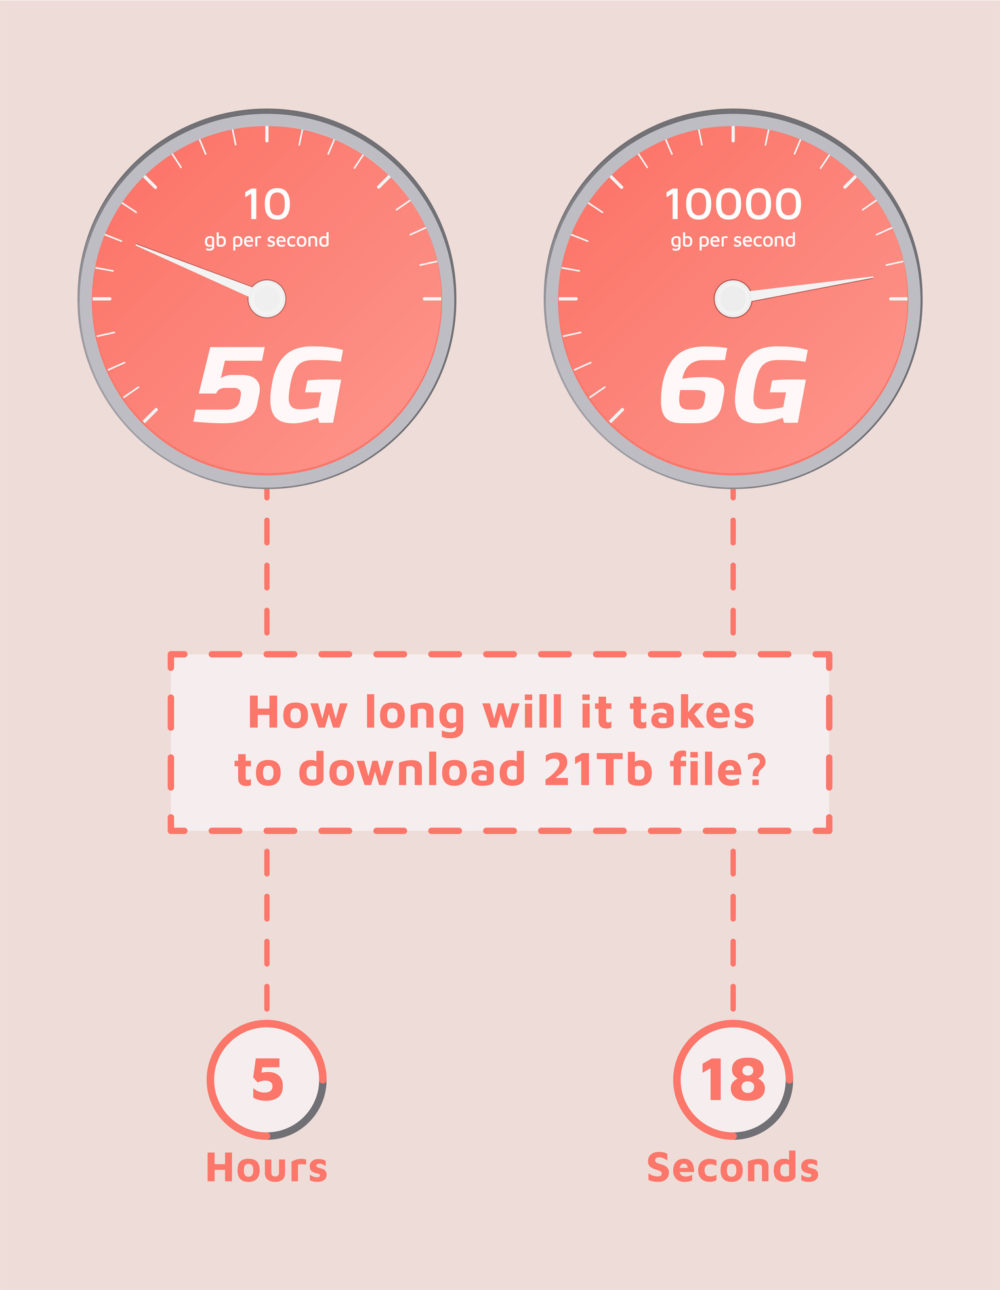 5G vs 6G network